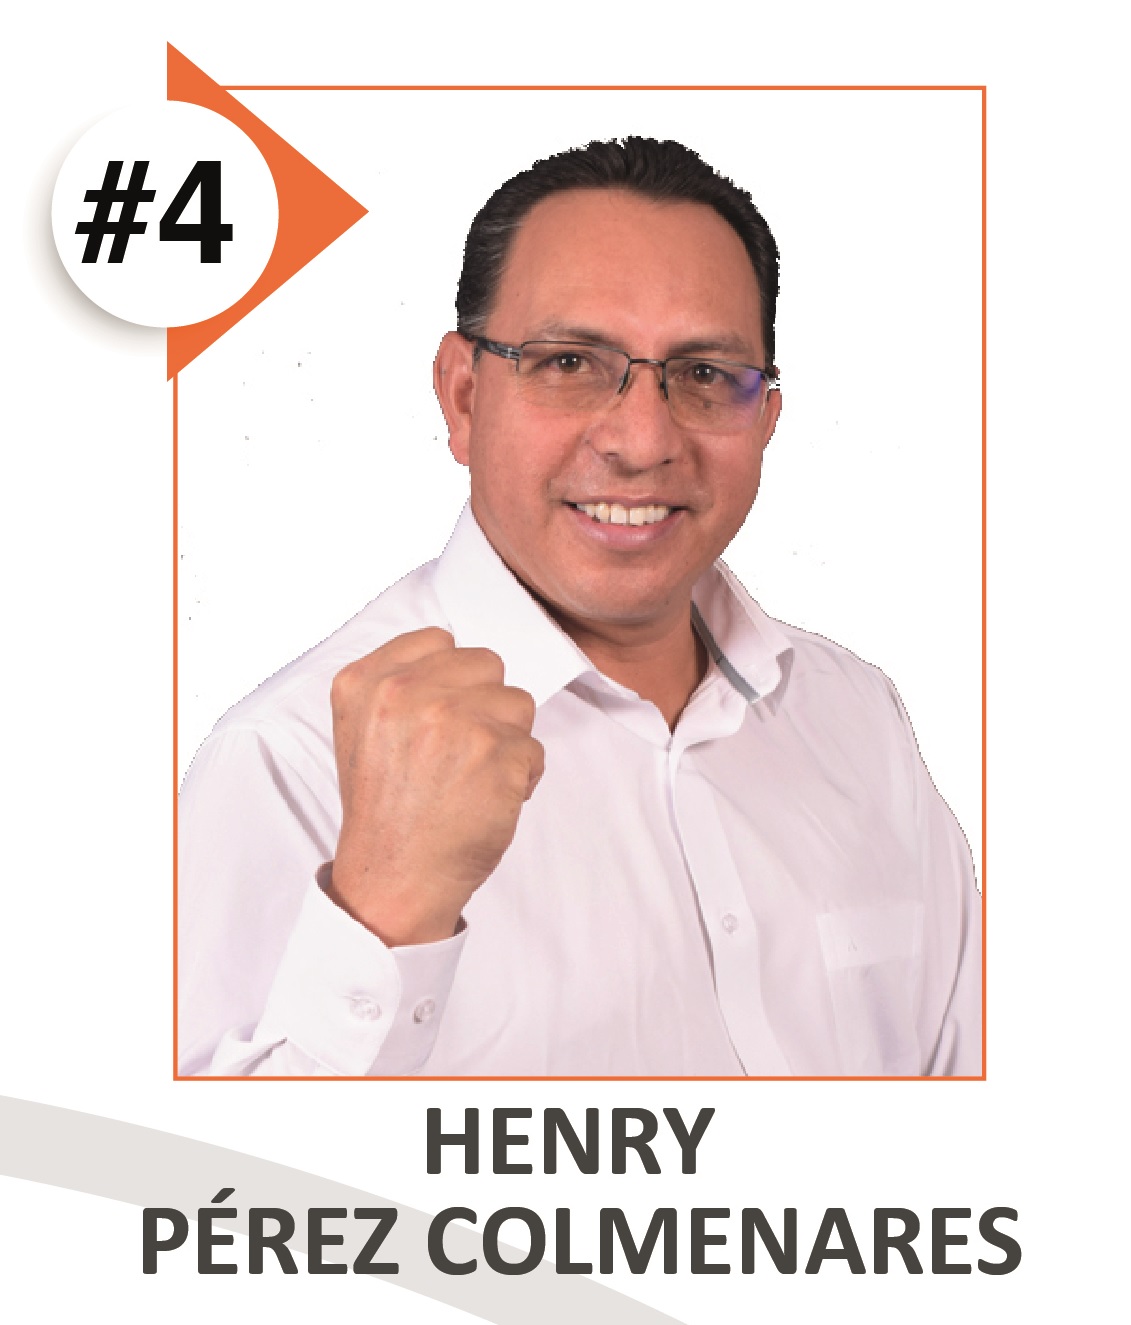 HENRY PEREZ